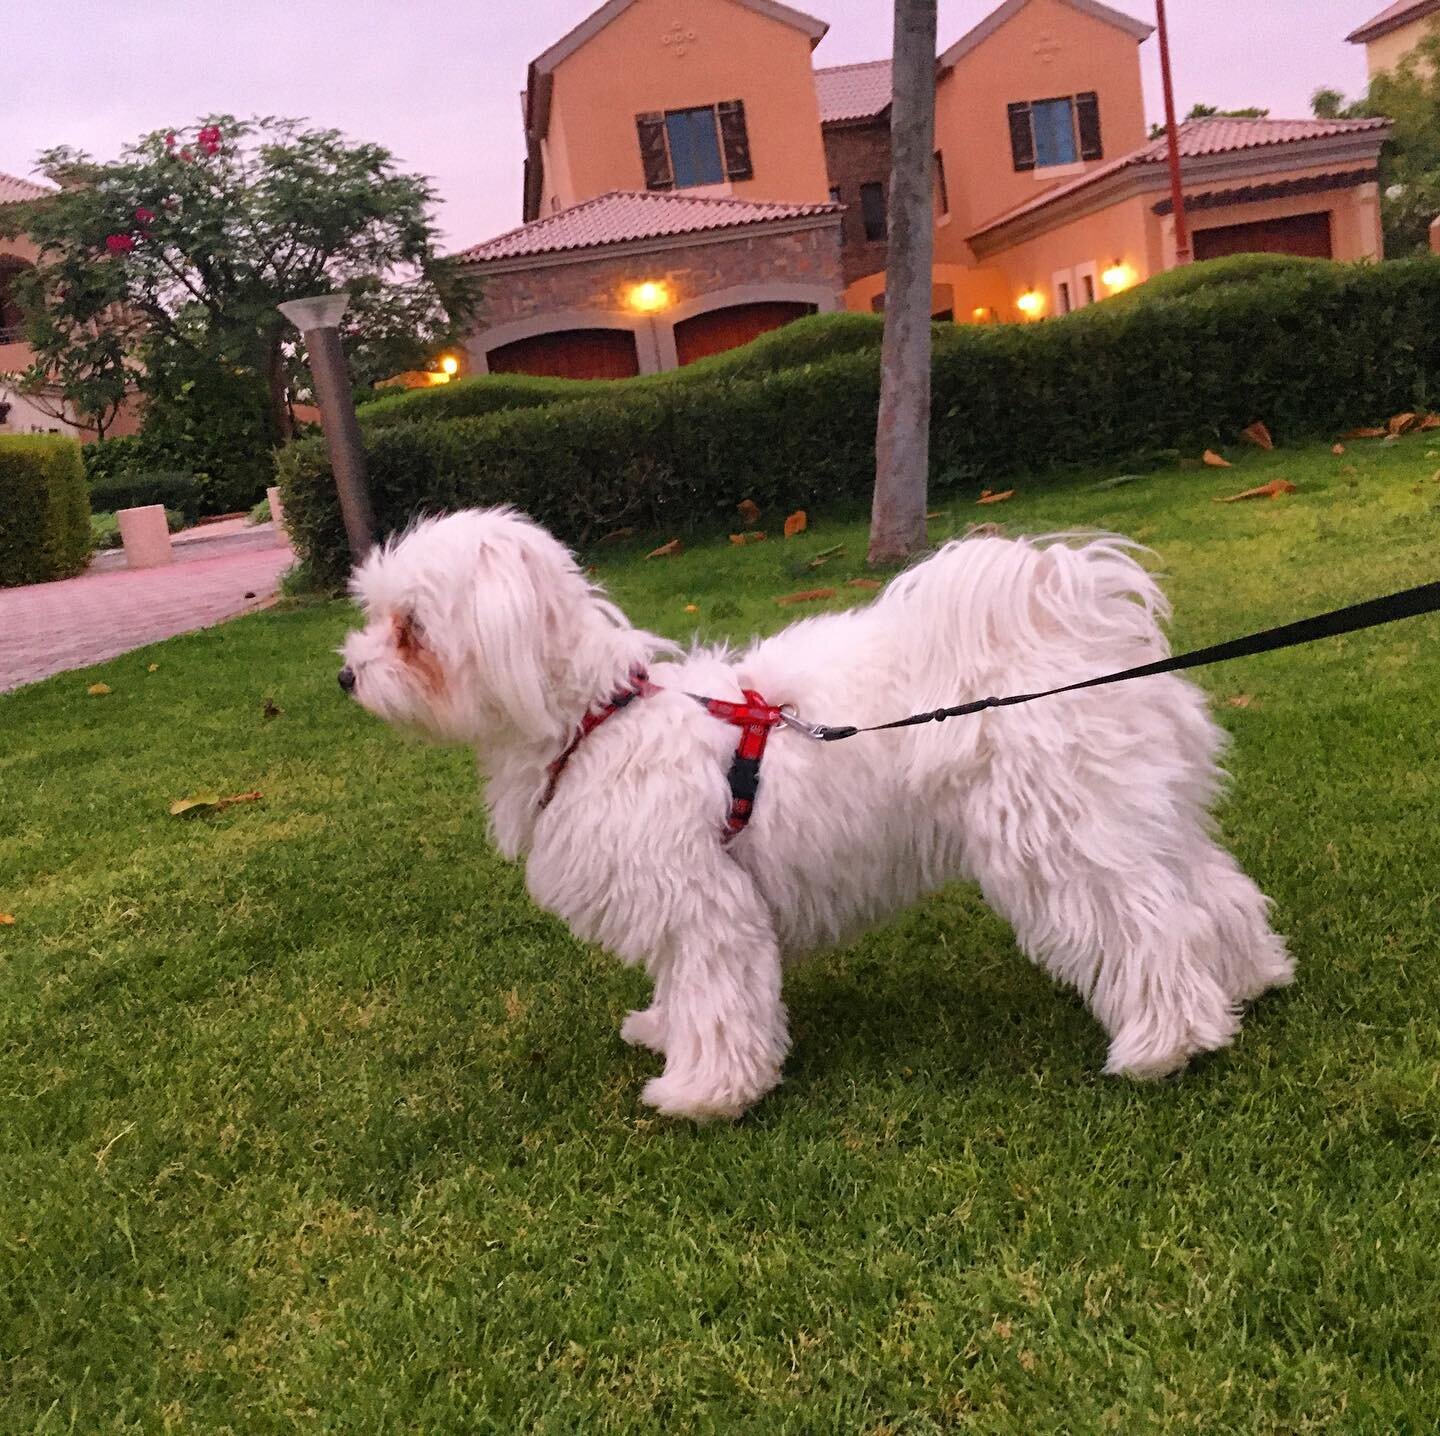 Nelly thinks she&rsquo;s at Crufts 😄 @crufts #maltese #malteseofinstagram #cutepuppy #puppylove #dogsofinstagram #dubaidogs #dogsindubai